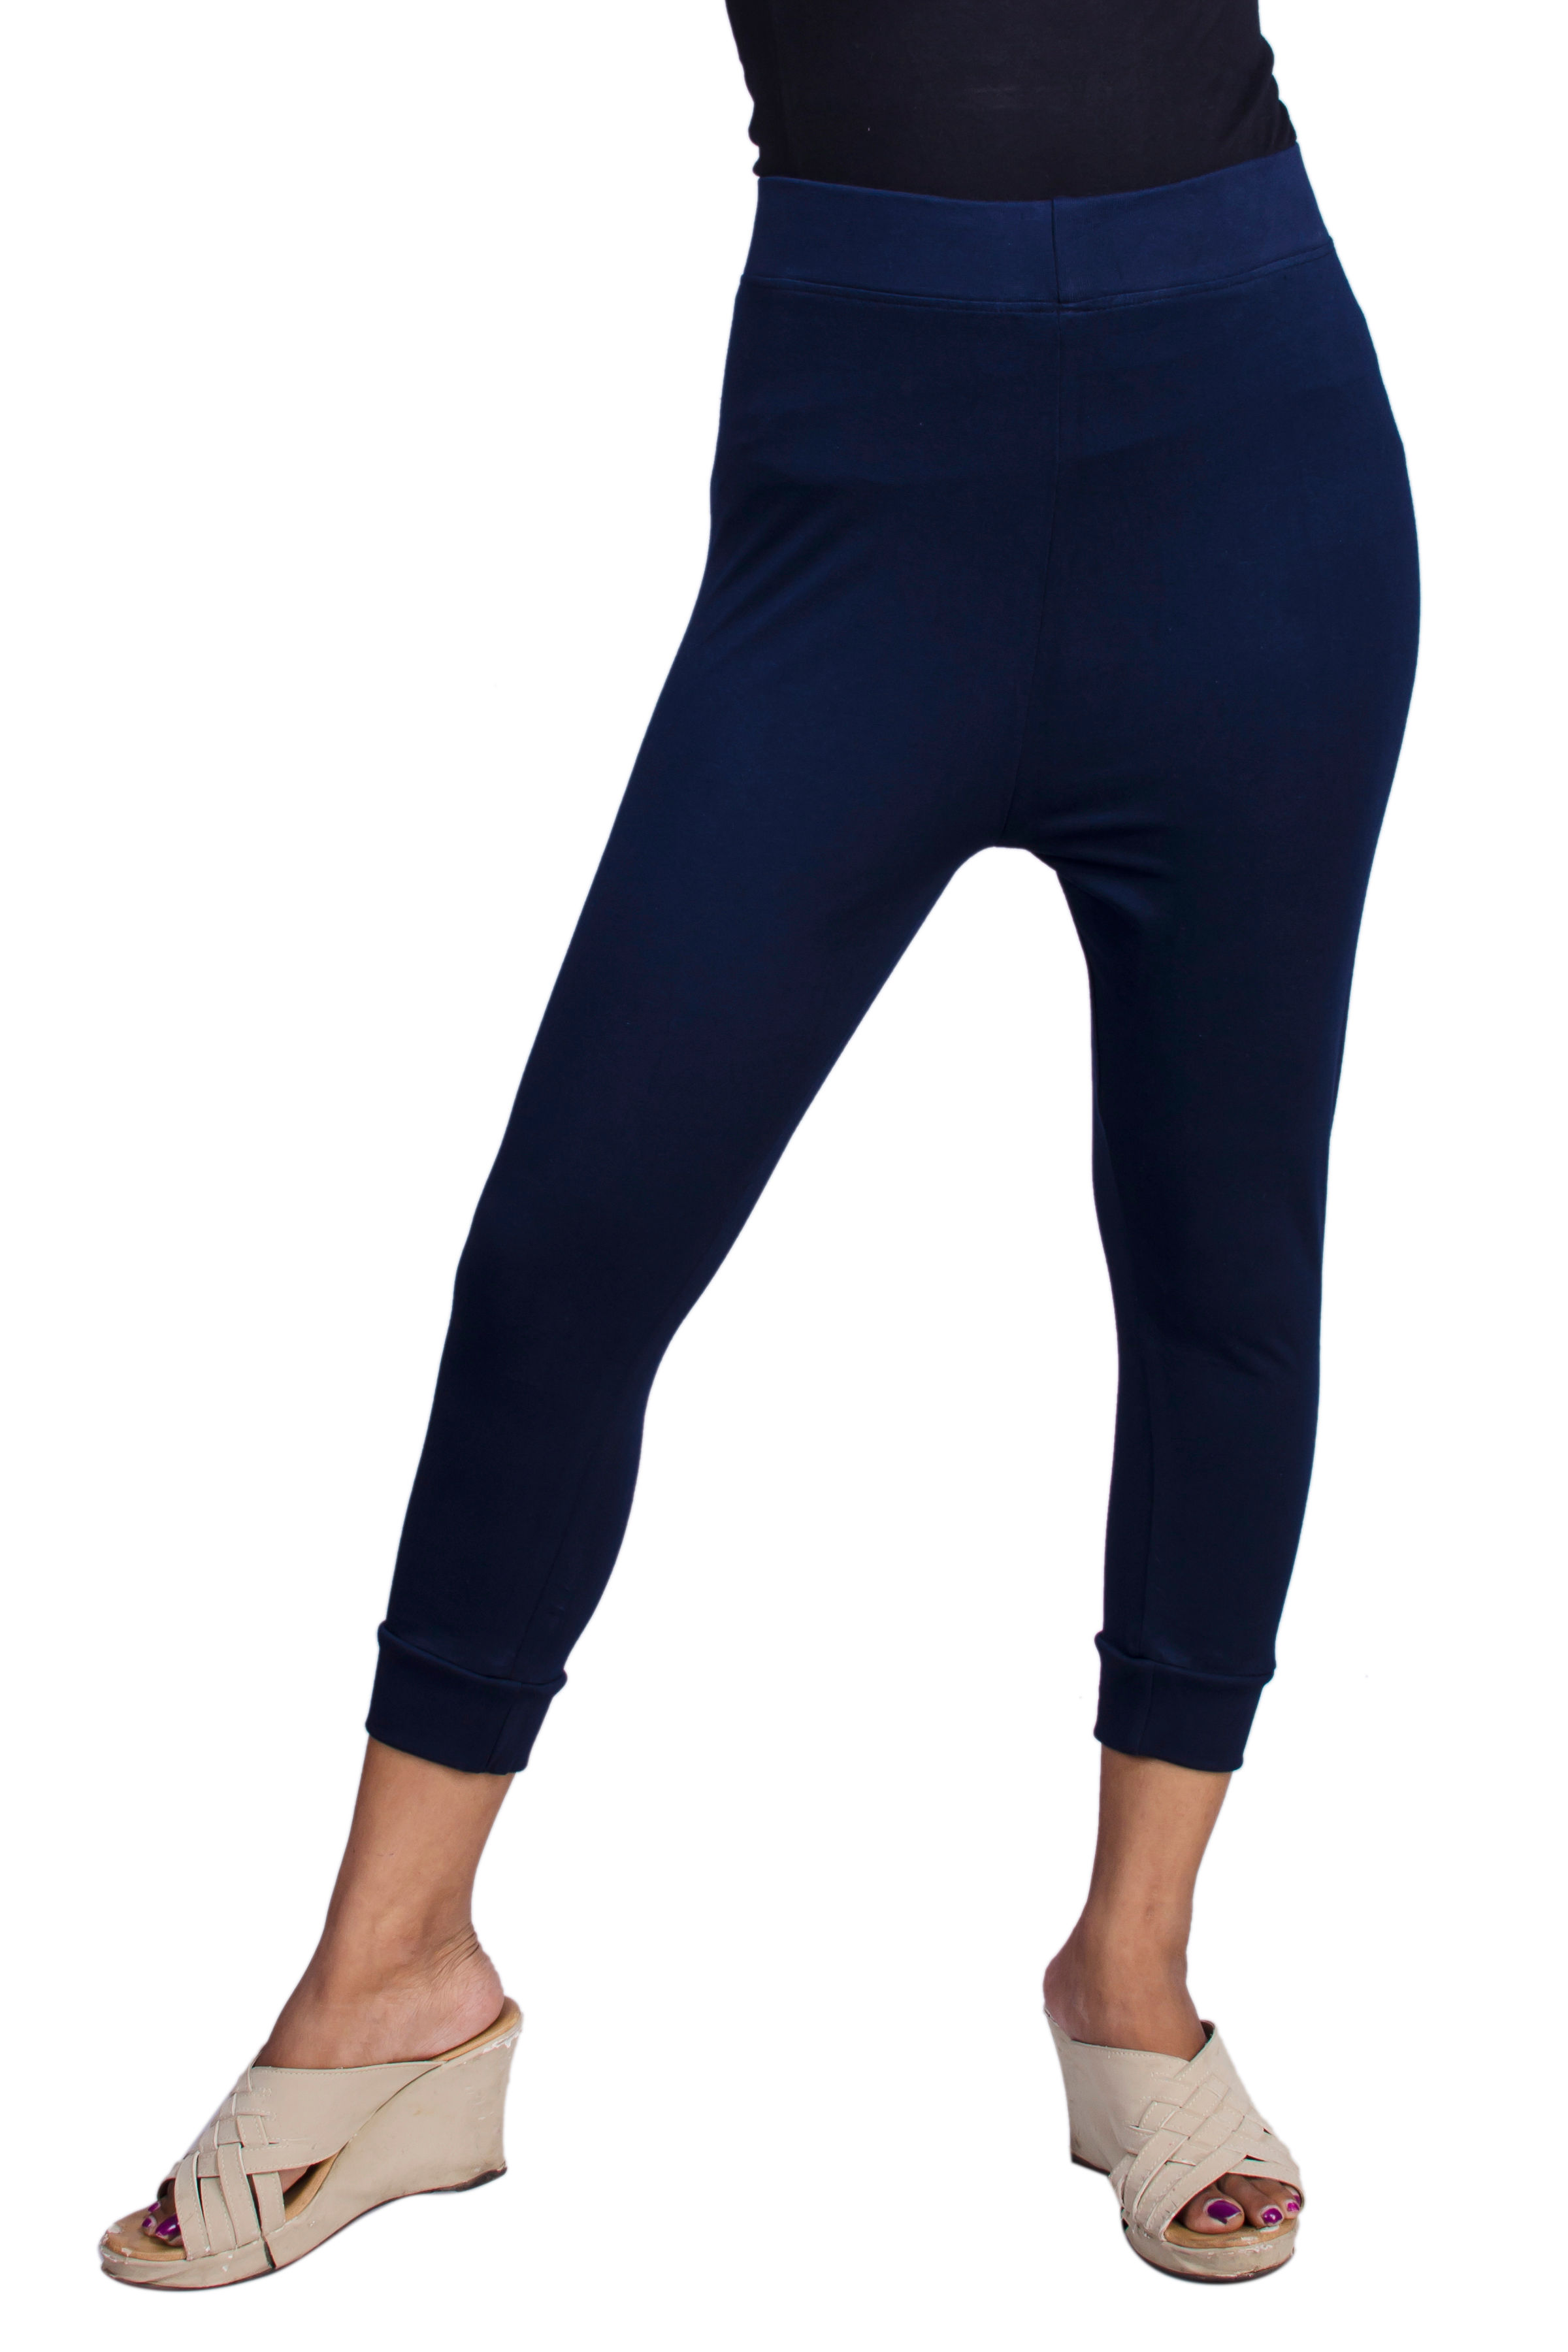 Wholesale Yoga Pants Manufacturers Suppliers